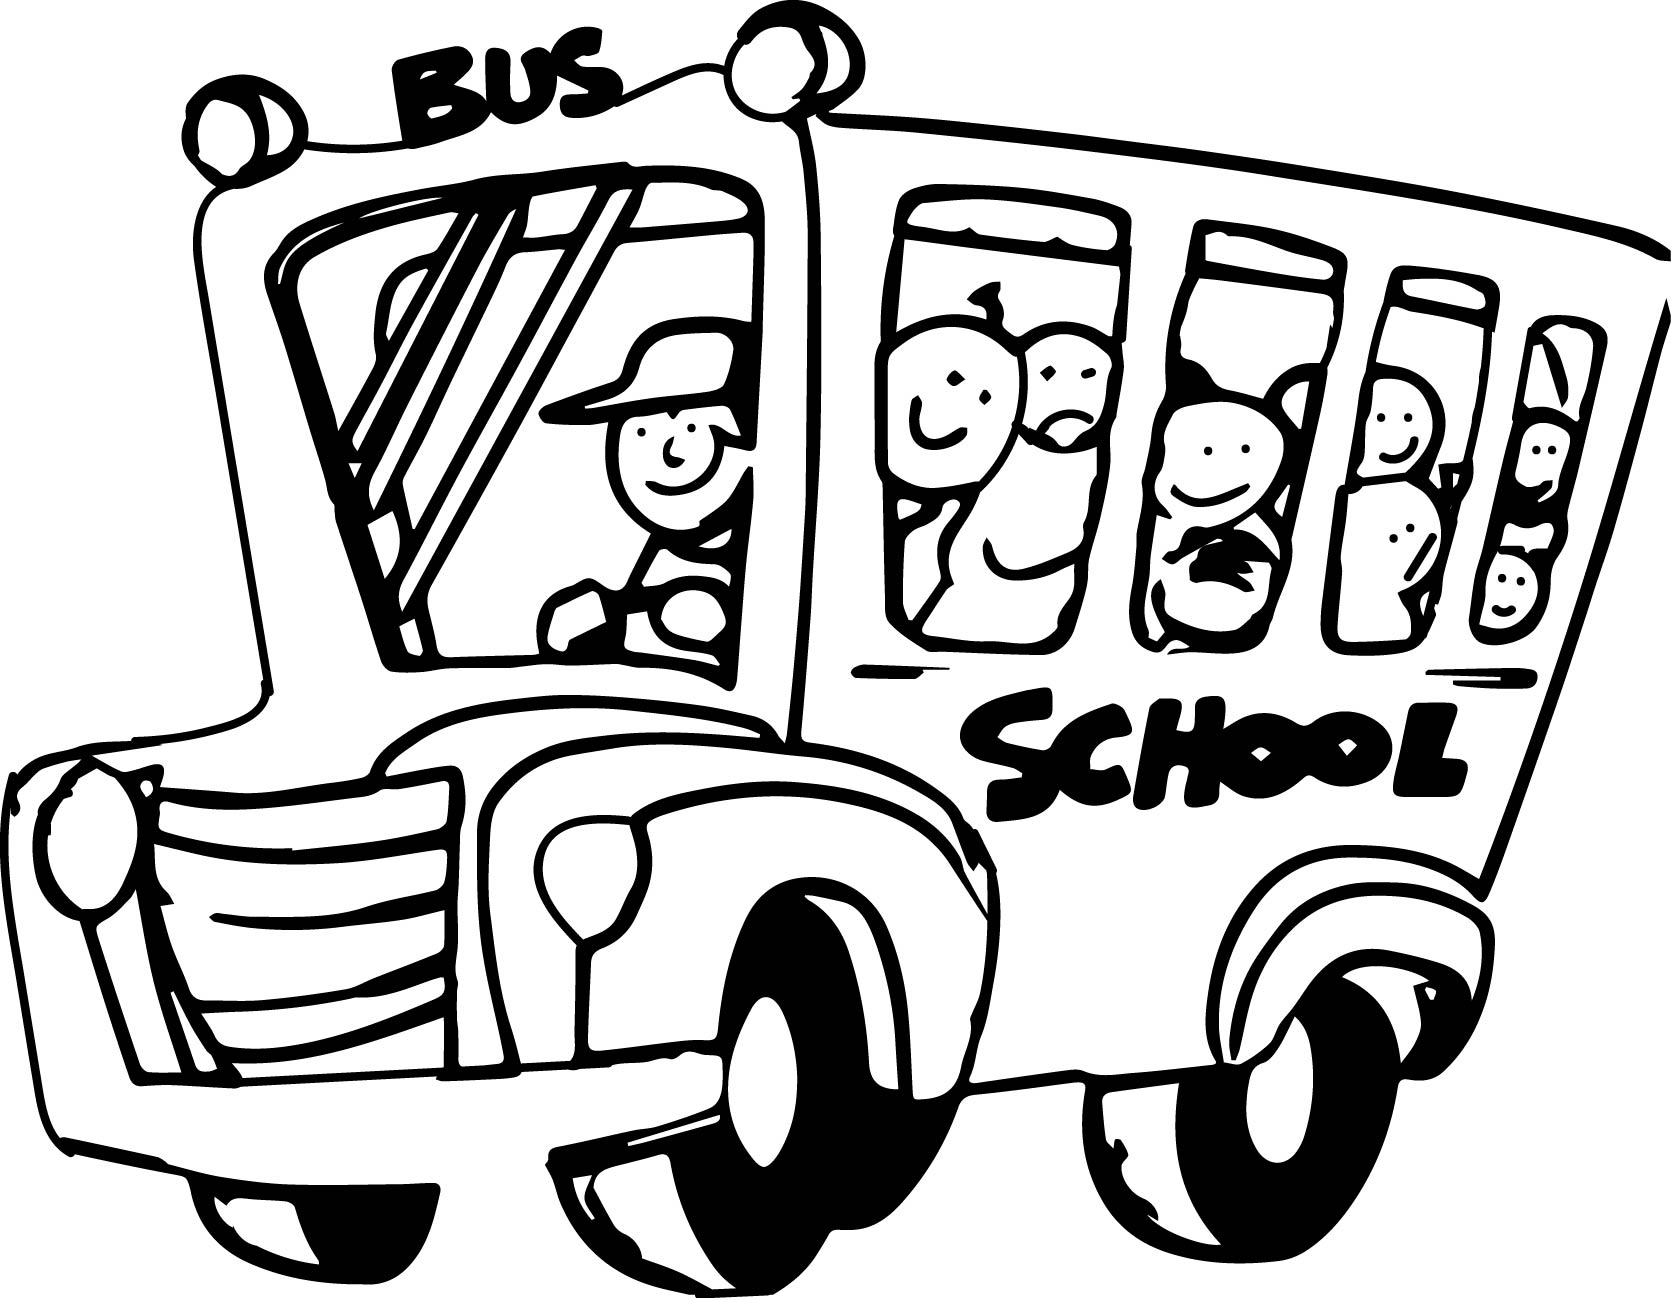 Funny Bus Kids Cartoon Wall Preschool Coloring Page | Wecoloringpage.com